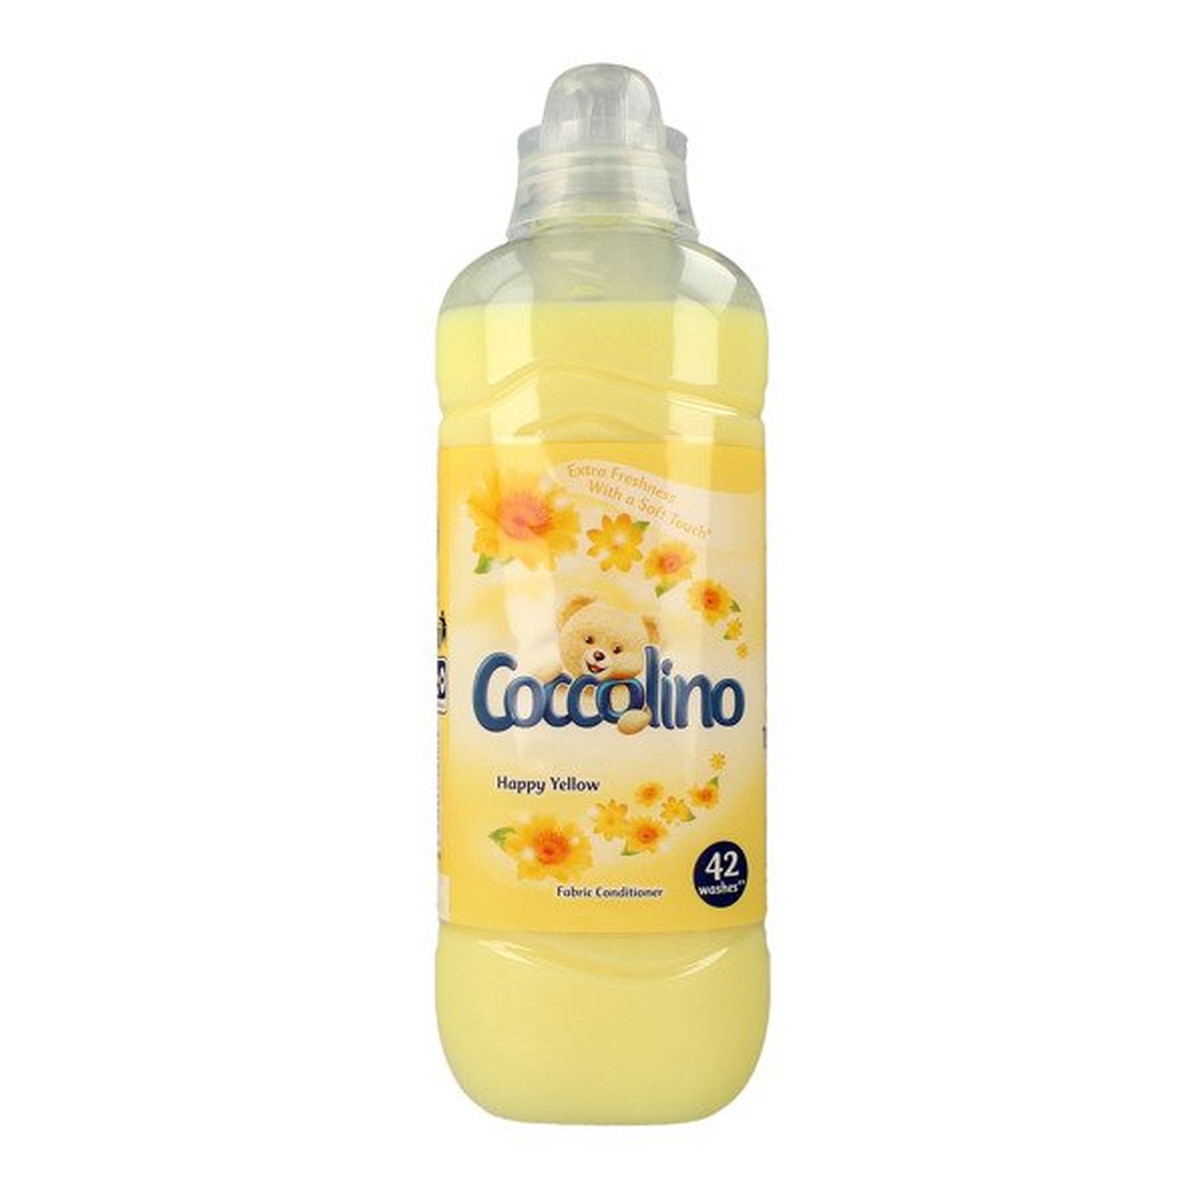 Coccolino Happy Yellow Płyn do płukania tkanin koncentrat (42 prania) 1050ml